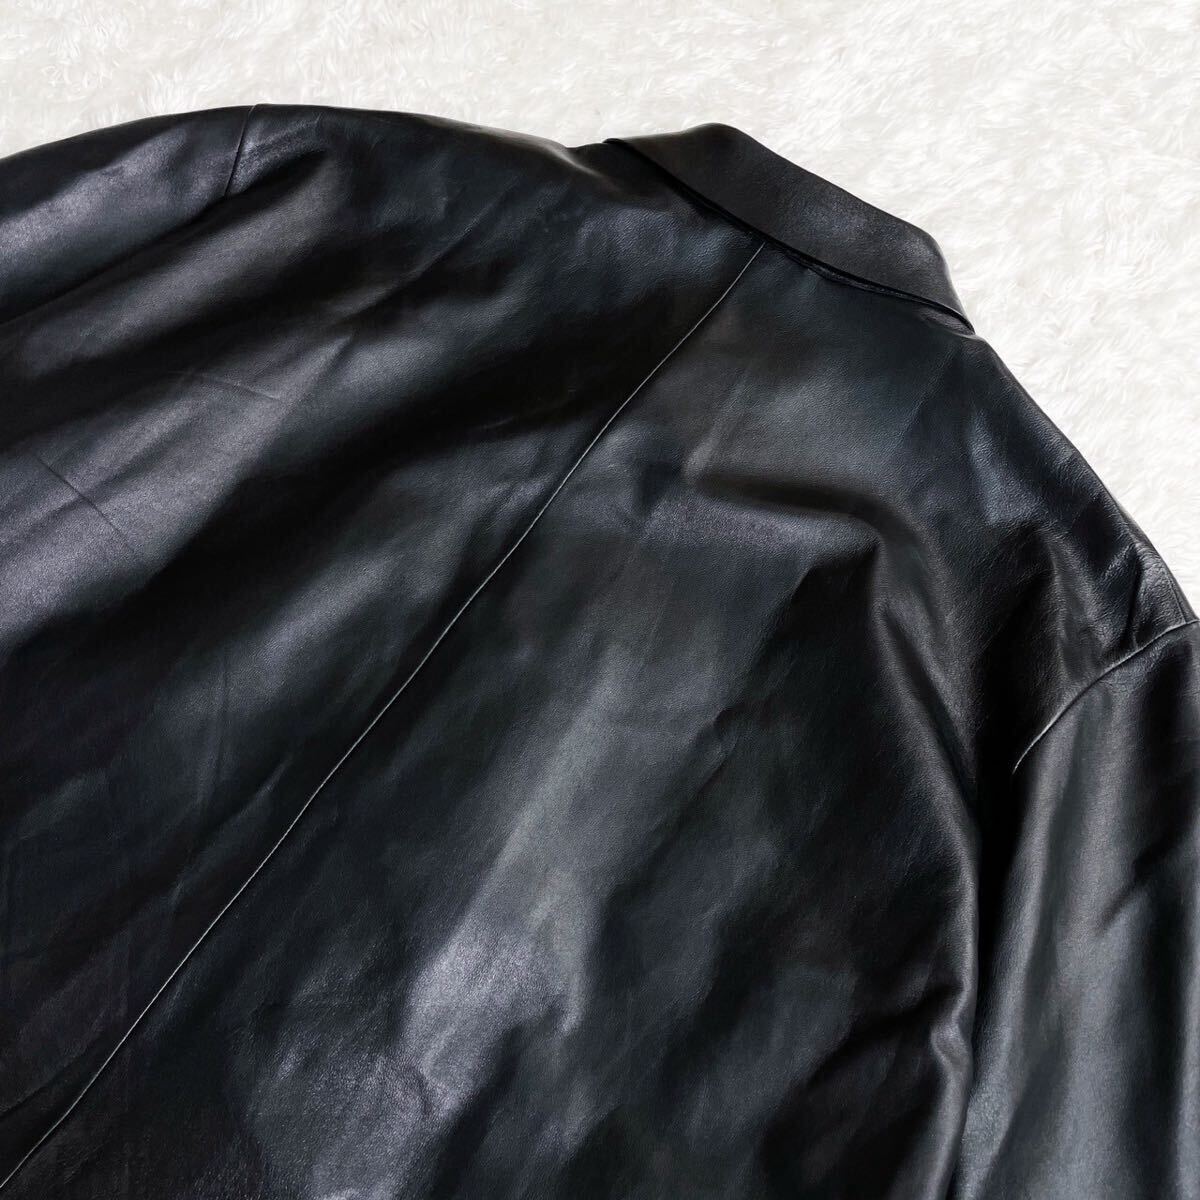  unused class JIL SANDER Jil Sander leather shirt black 48 short sleeves men's black 